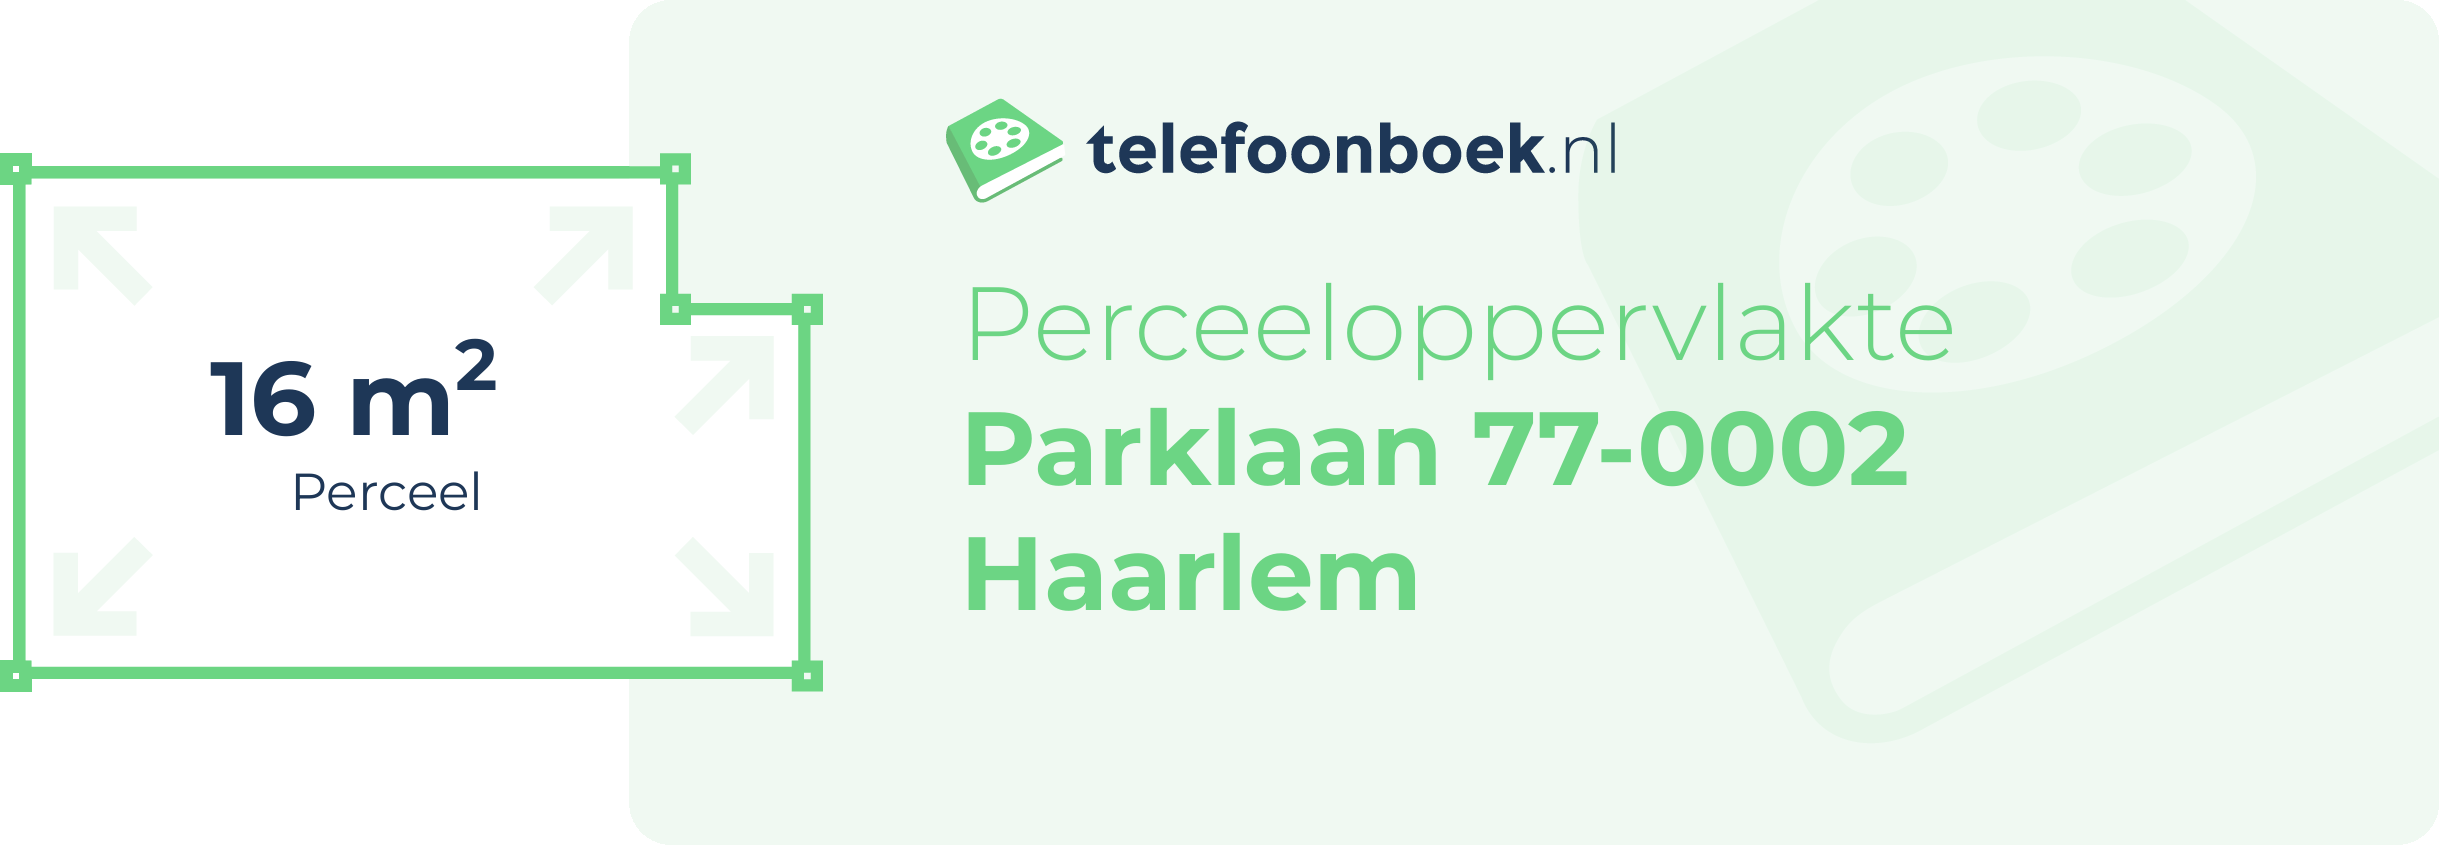 Perceeloppervlakte Parklaan 77-0002 Haarlem